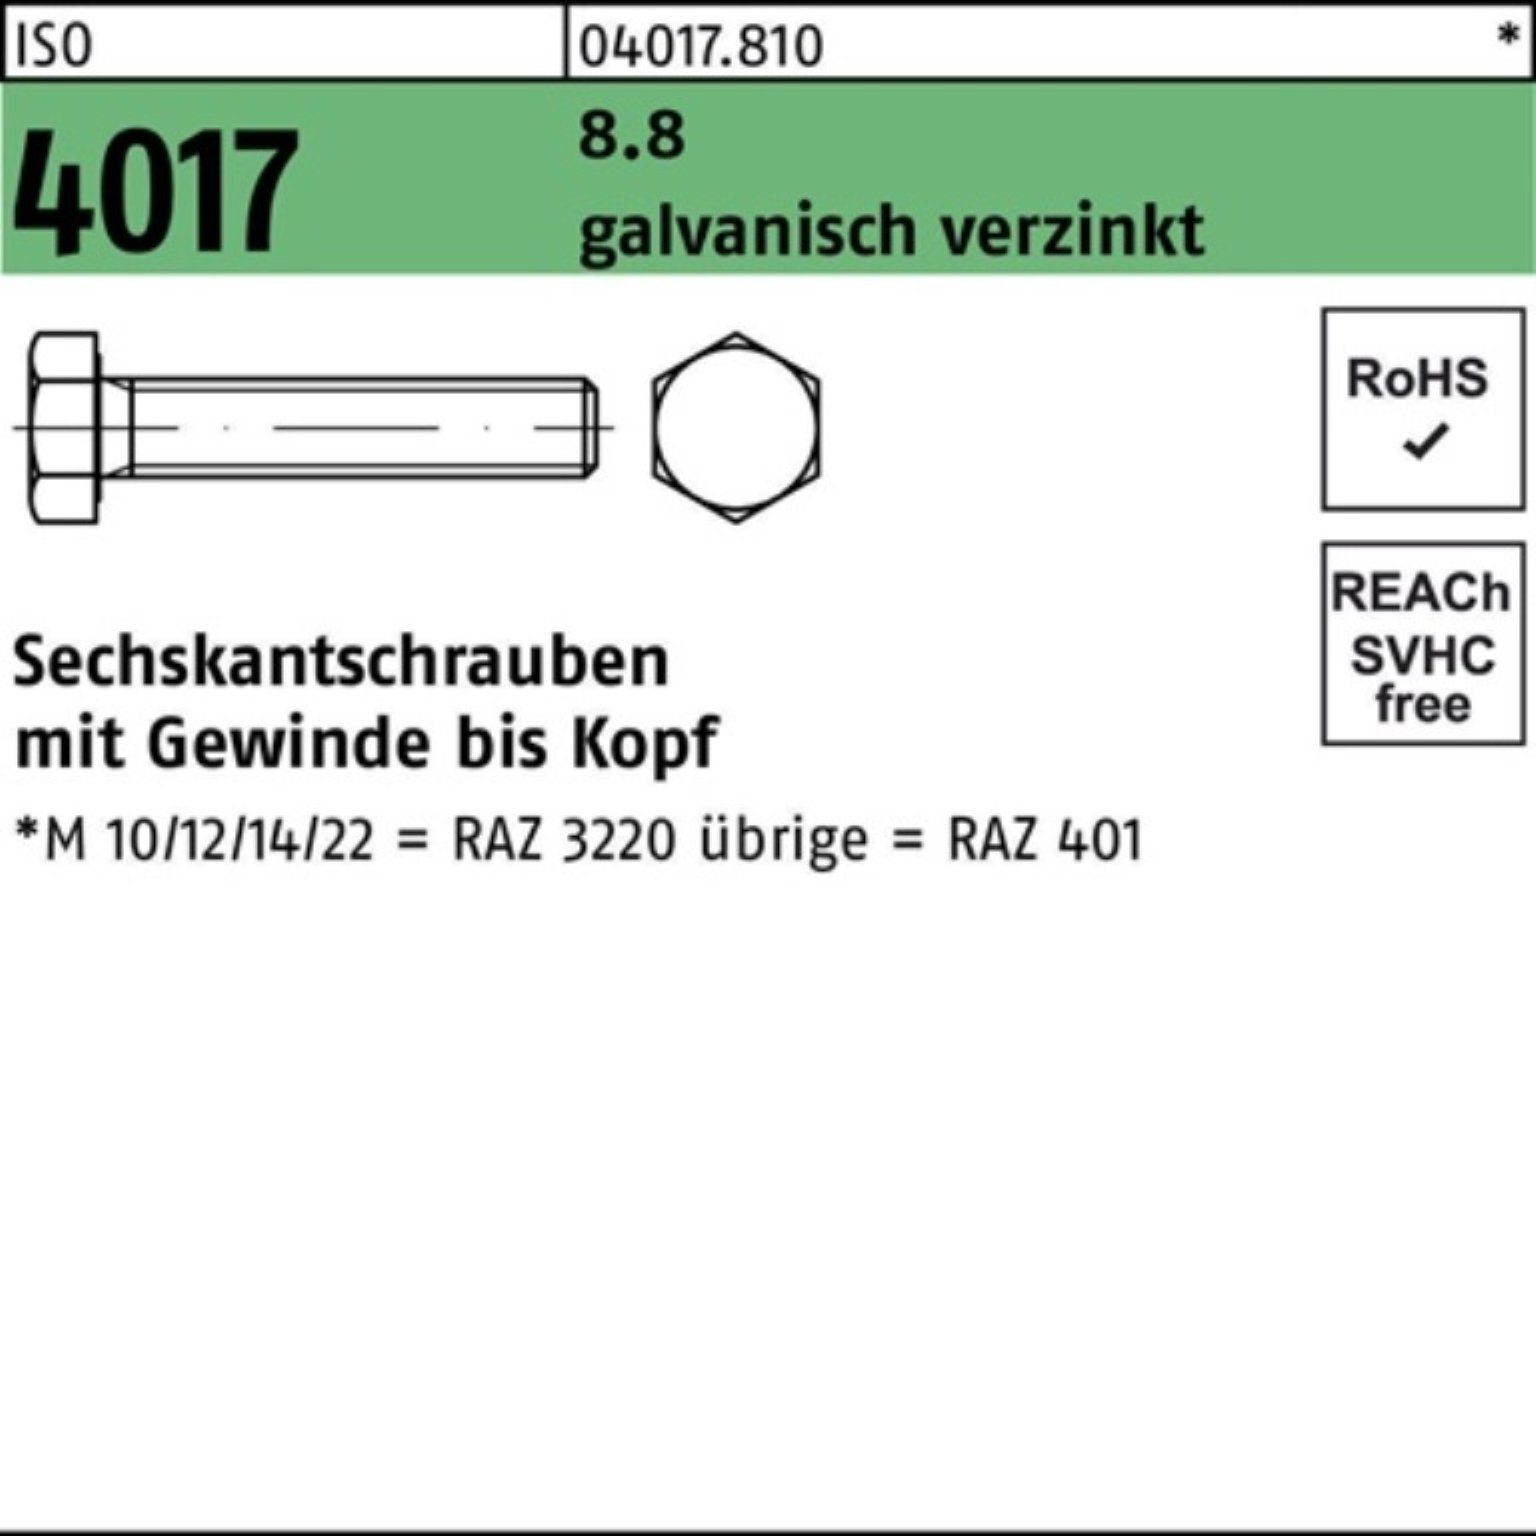 Bufab Sechskantschraube 100er 8.8 VG 90 St galv.verz. 50 M12x 4017 ISO Pack Sechskantschraube